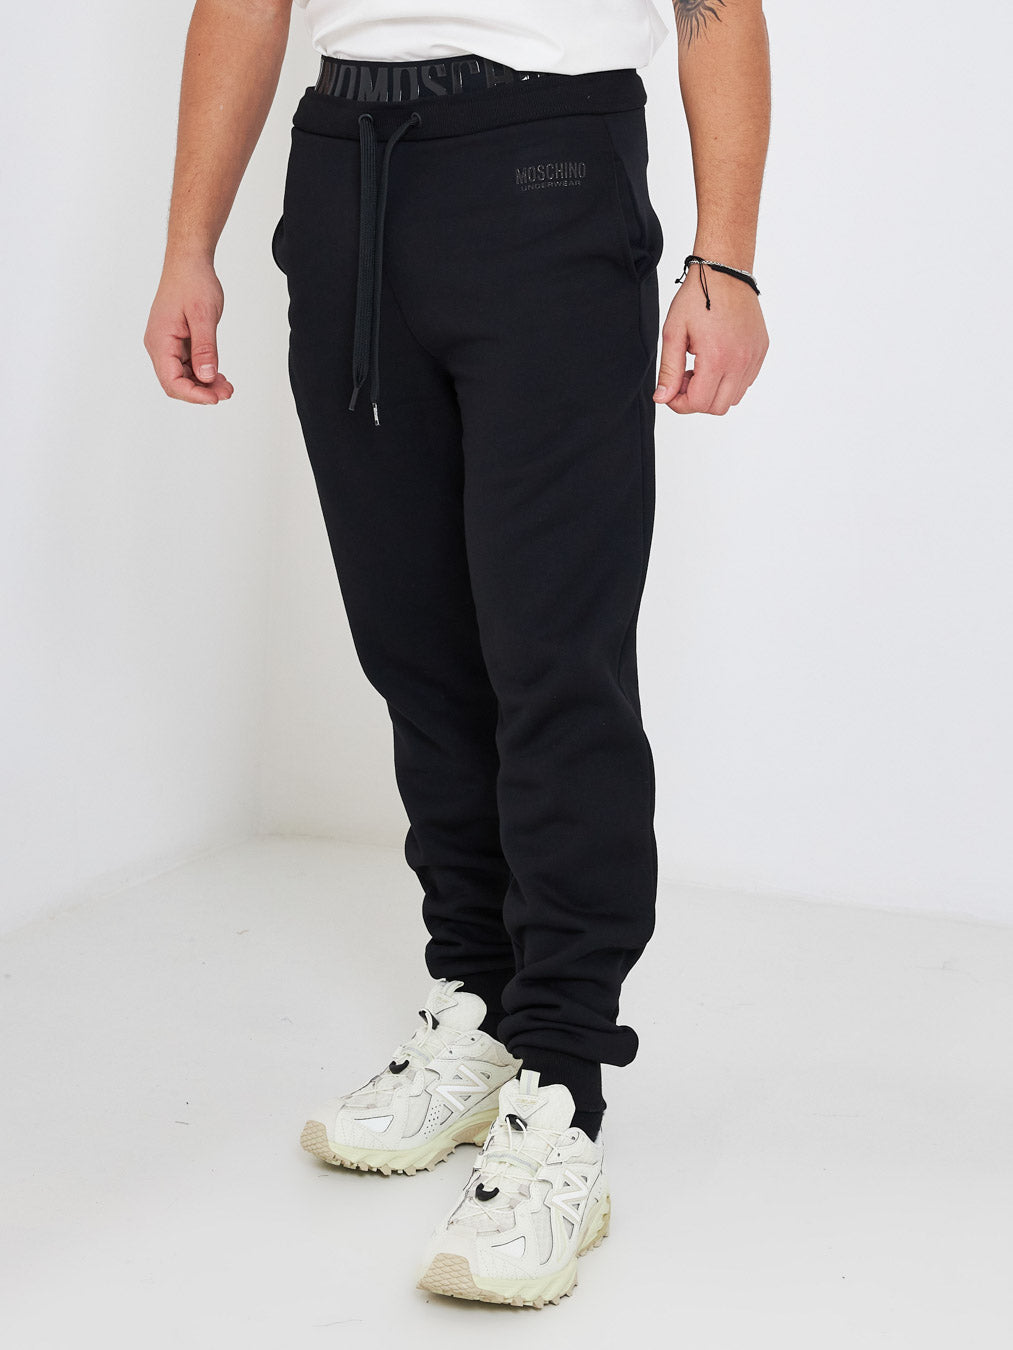 Moschino pantaloni tuta nero doppio elastico